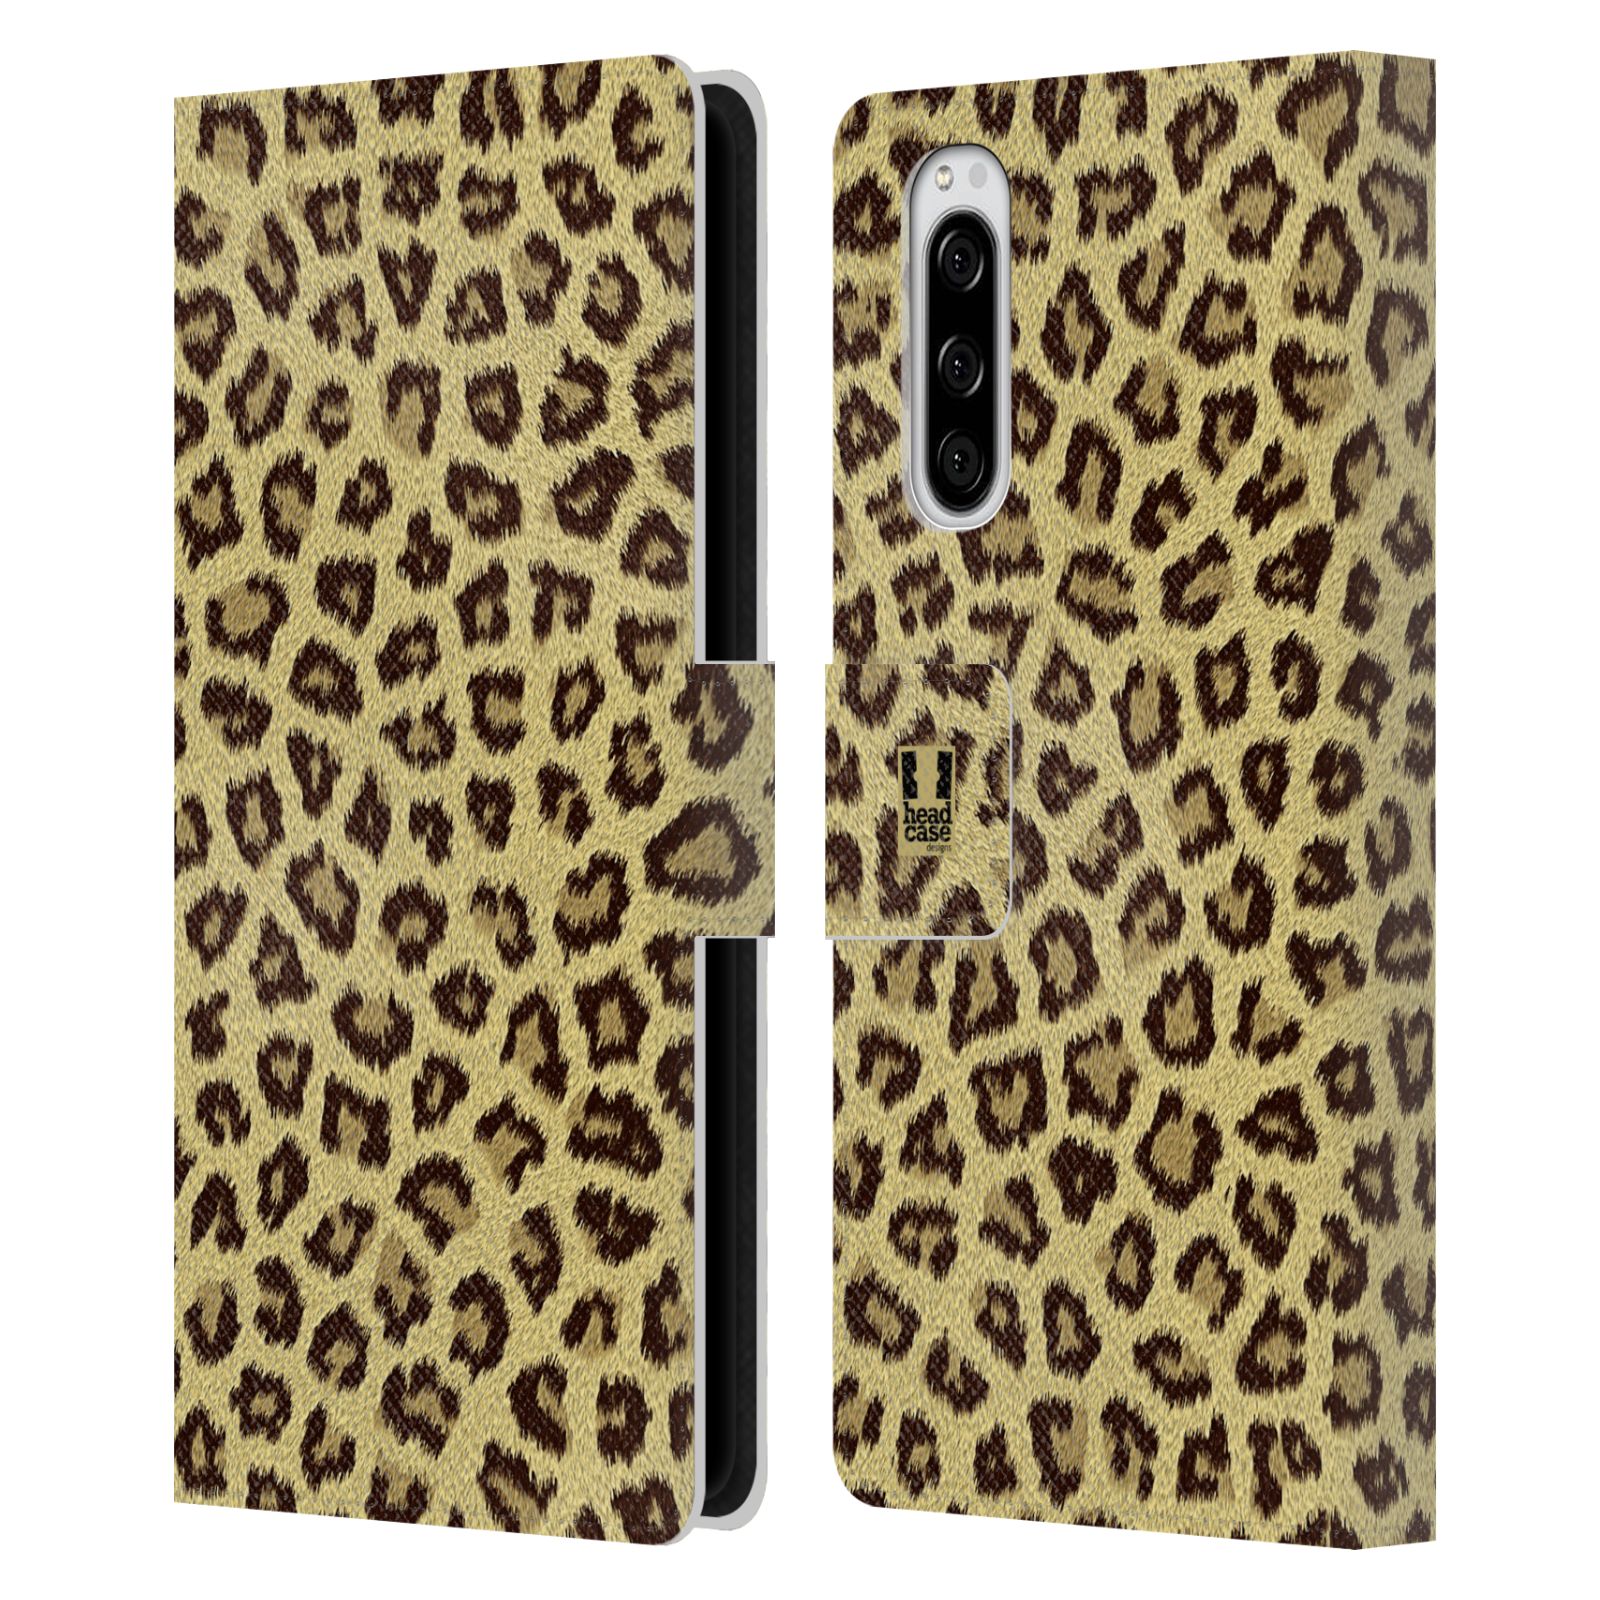 Pouzdro na mobil Sony Xperia 5 zvíře srst divoká kolekce jaguár, gepard